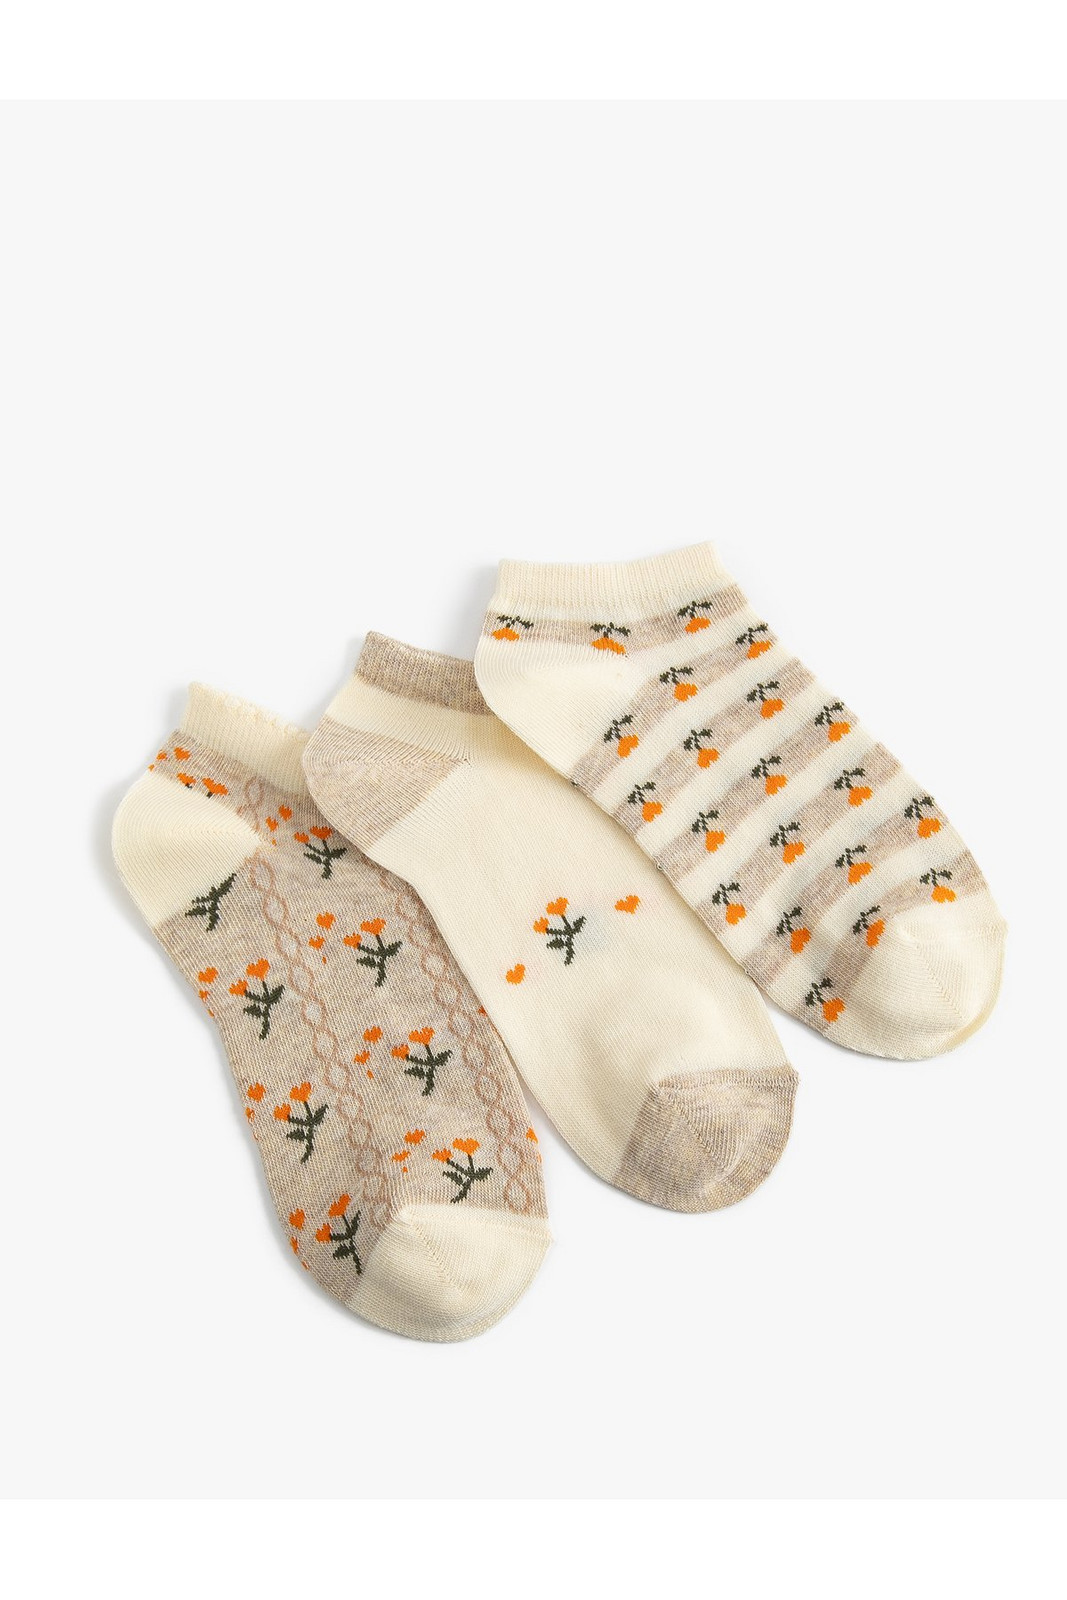 Koton 3-Piece Booties Socks Set Multicolored Floral Pattern